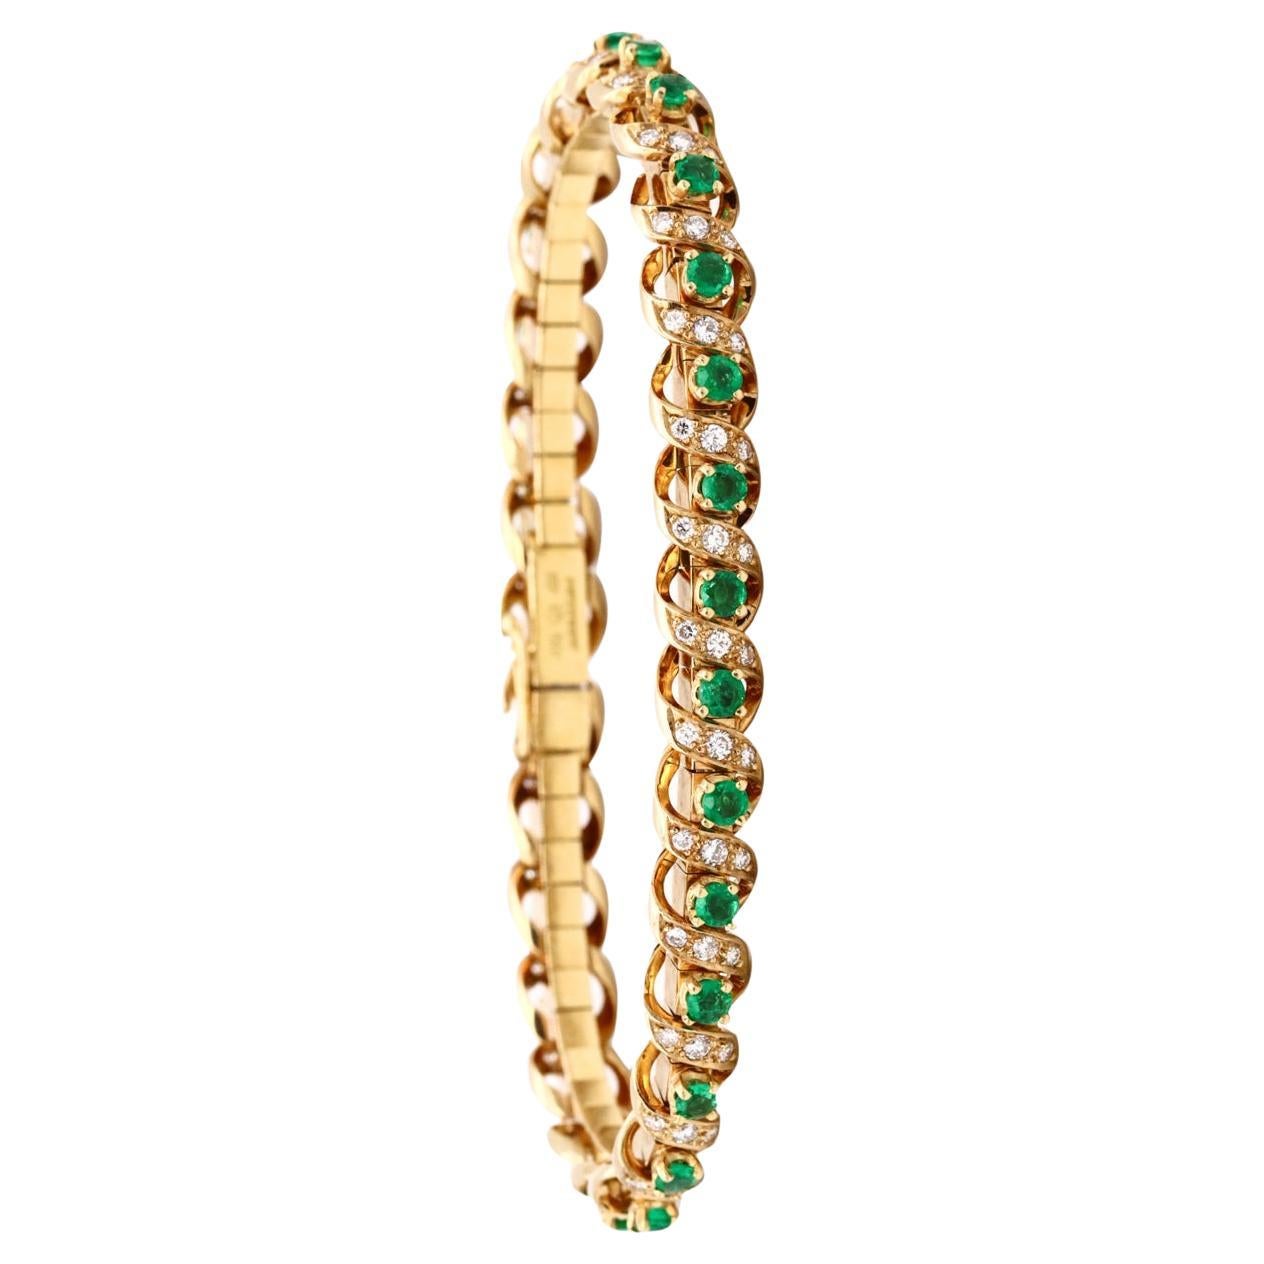 Gubelin 1960 Swiss 18kt Gold Bracelet 4.64 Ctw Colombian Emeralds and Diamonds